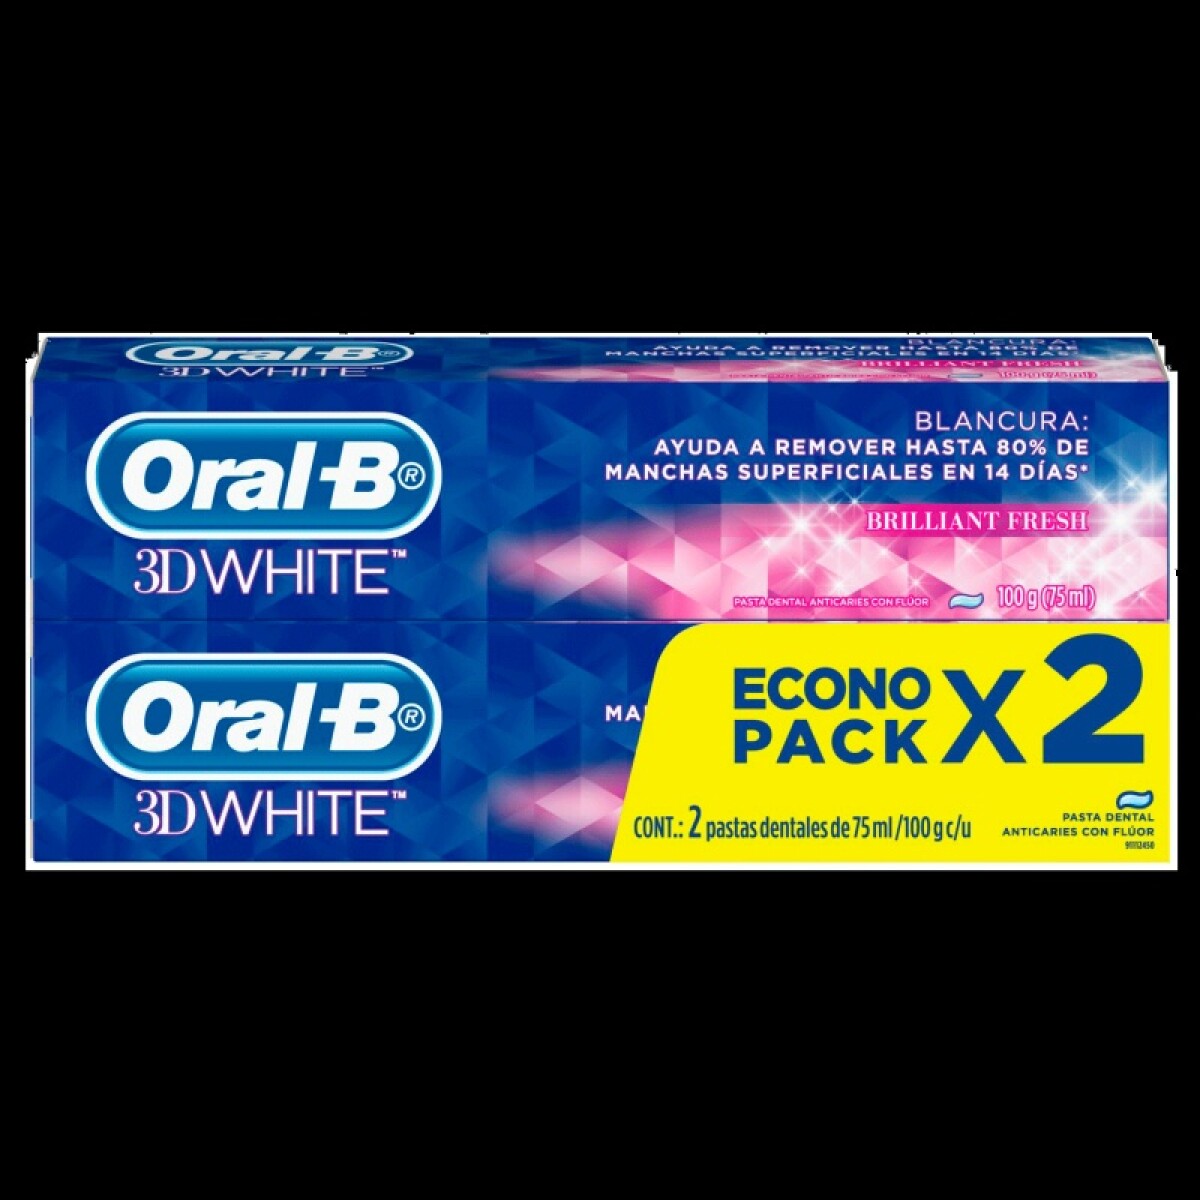 Oral-B Pack X 2 3D White Brilliant 1 